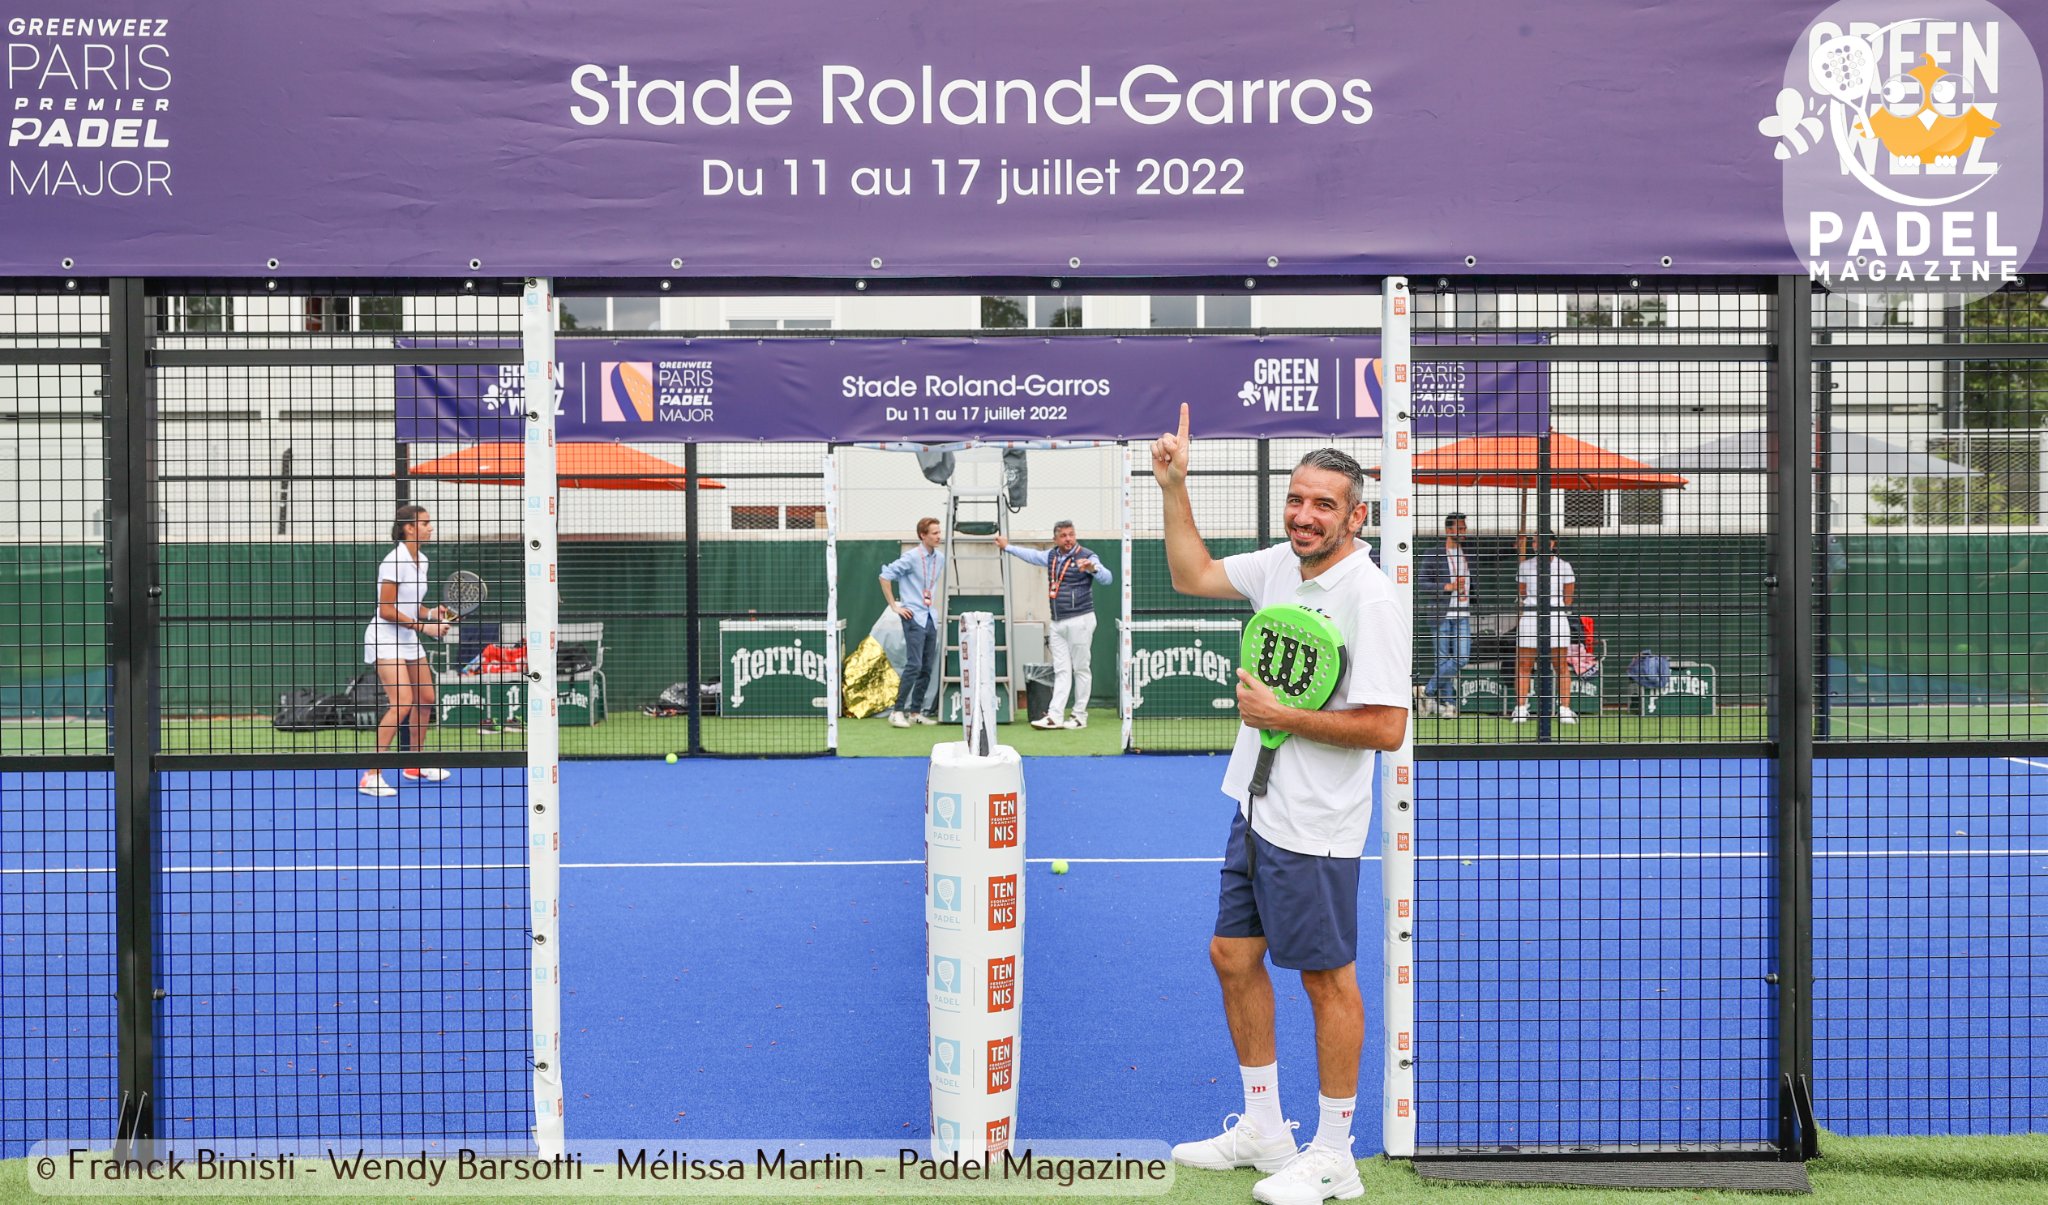 stadion Rolanda Garrosa greenweez paris premier padel major